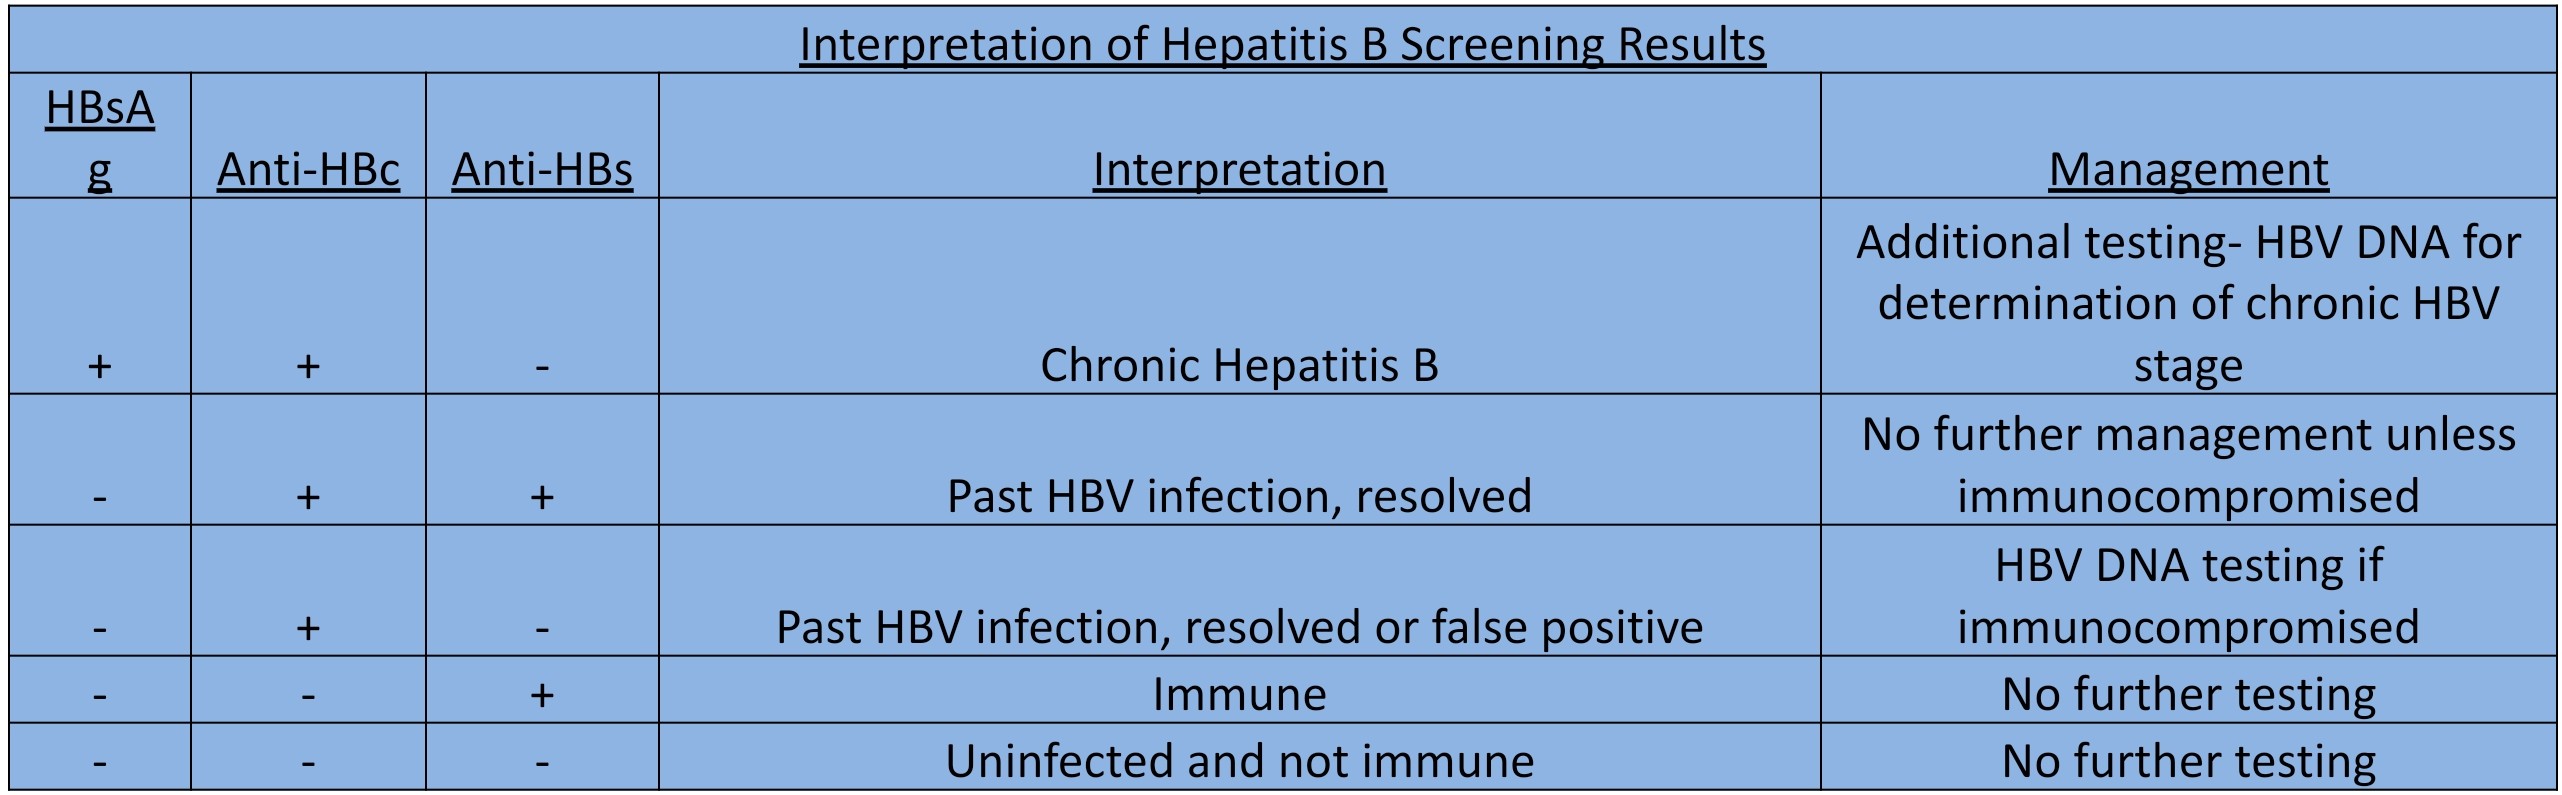 <p>Interpretation of Hepatitis B Screening Results